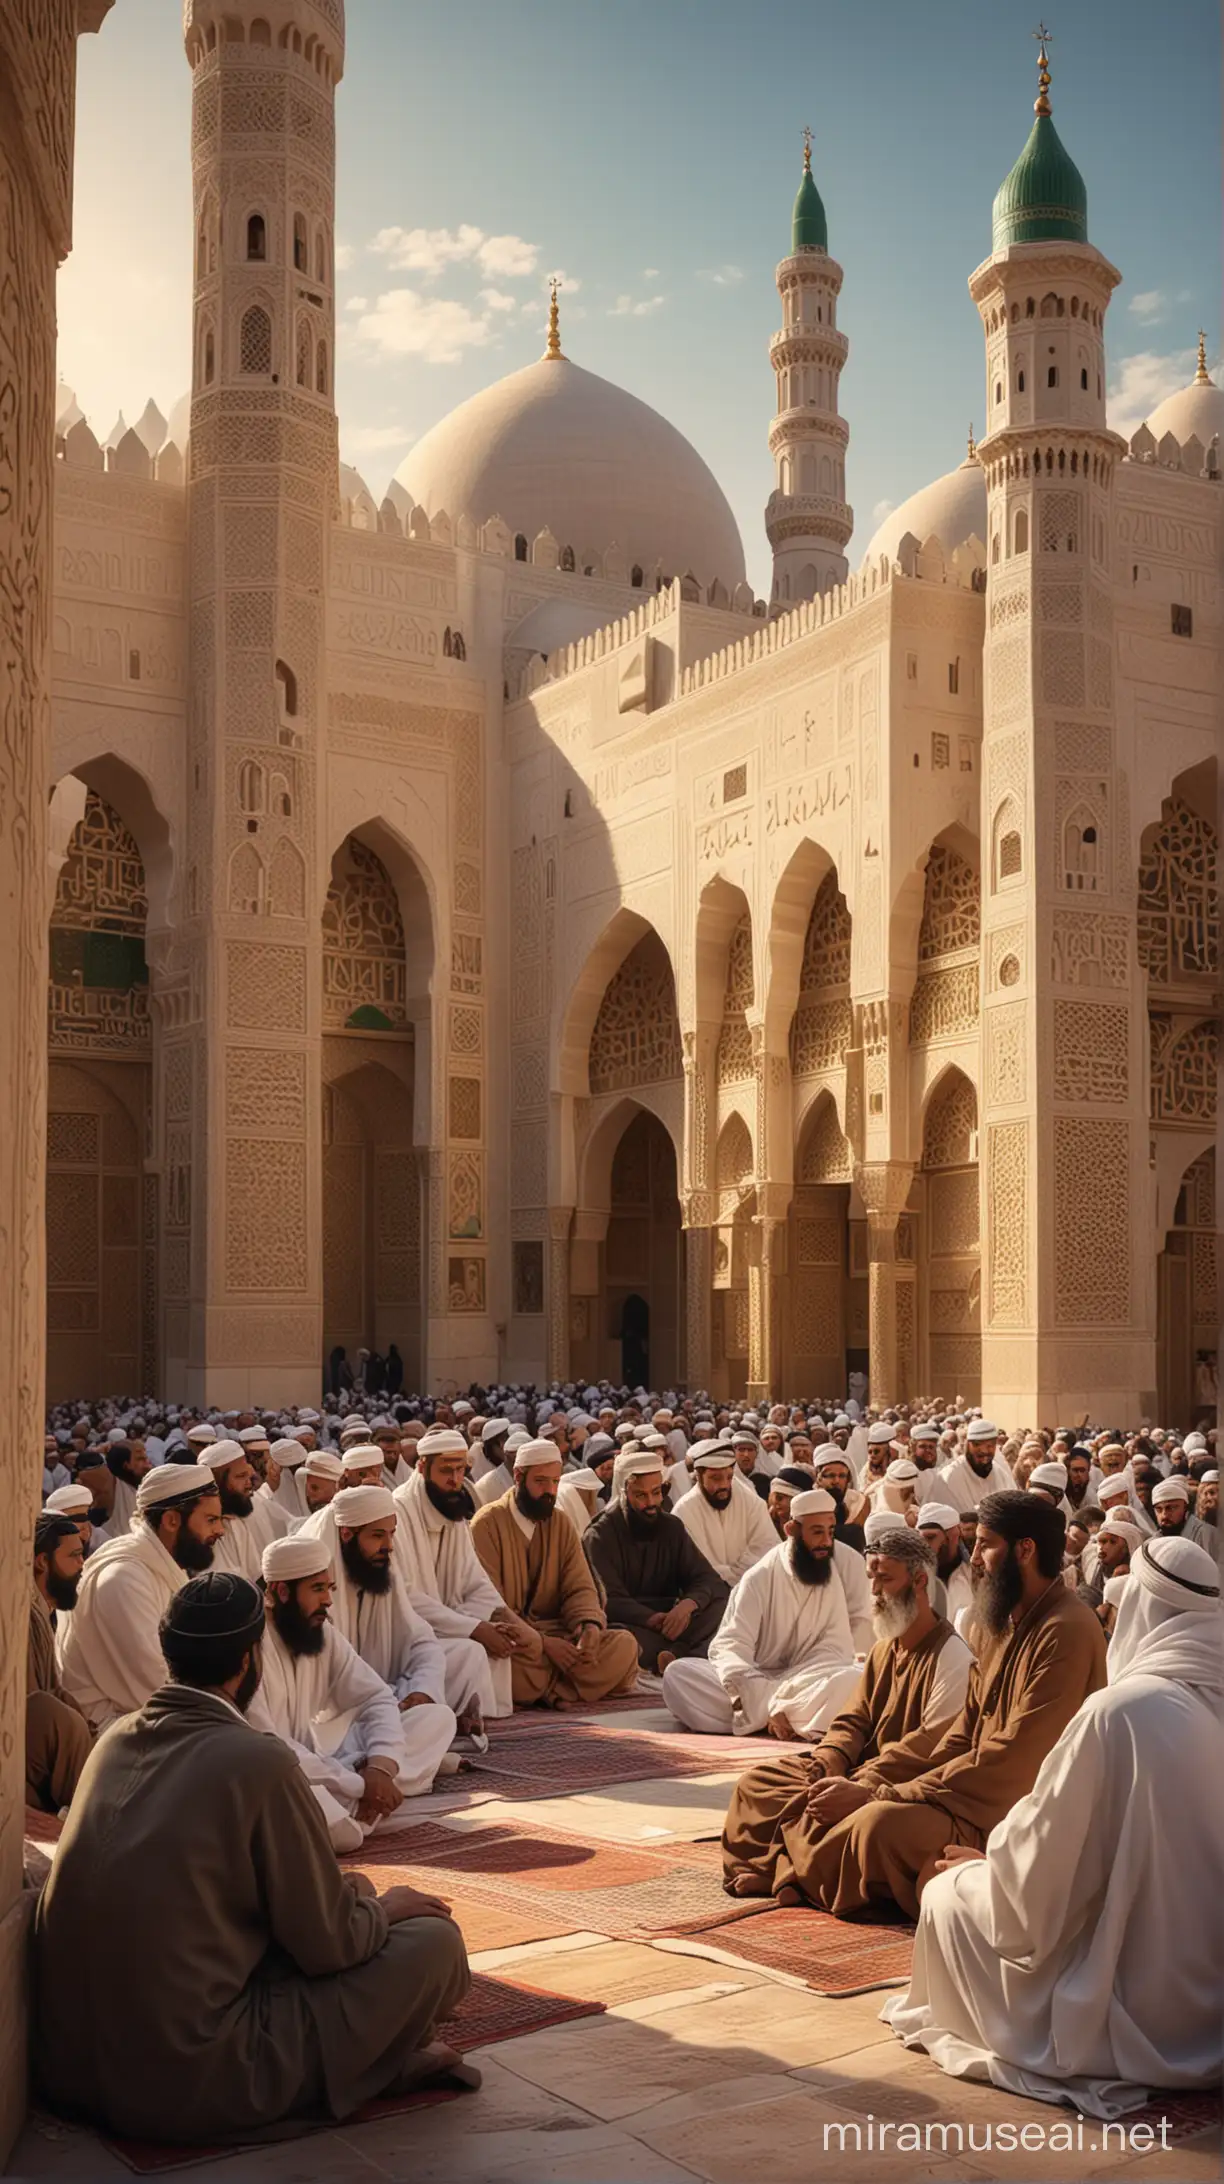 Muhammad the Prophet of Islam Imparts Wisdom to His Companions in Serene Medina Setting